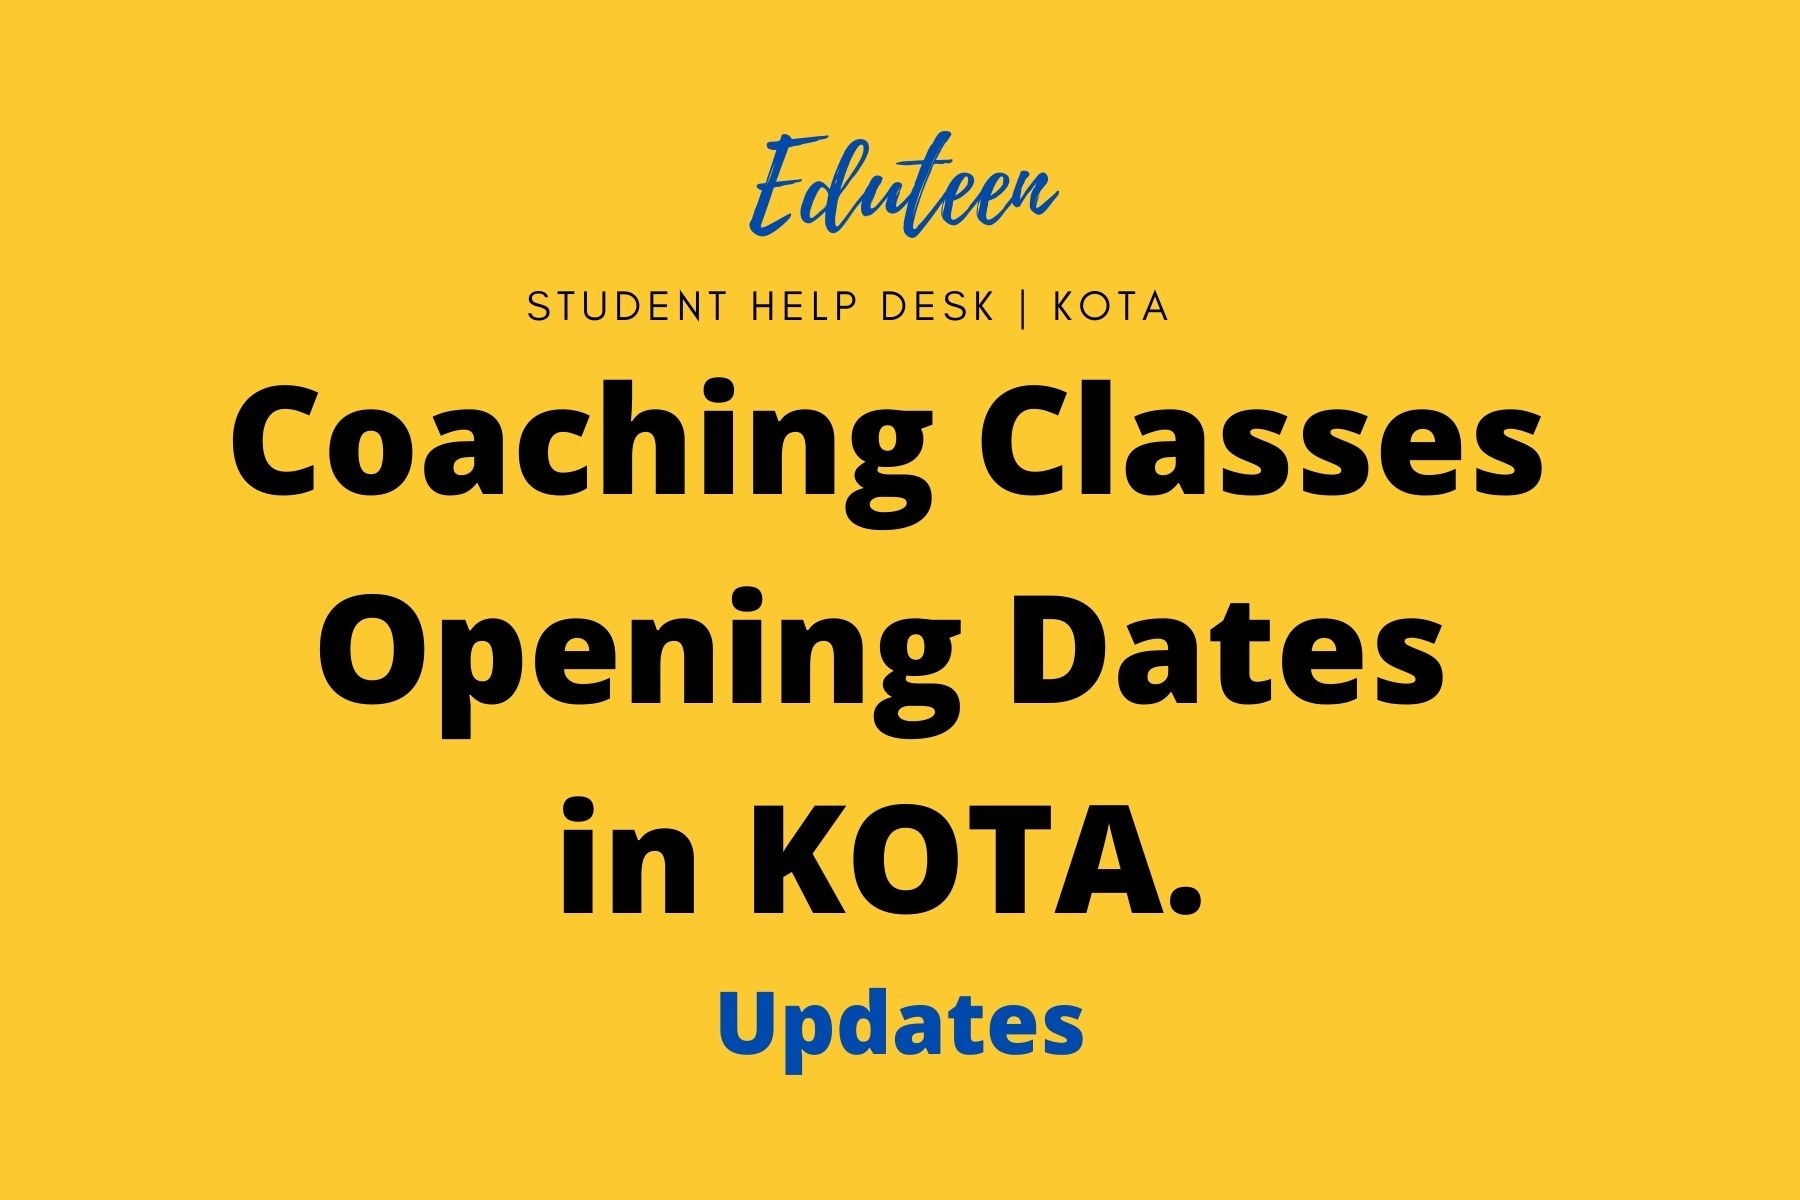 Coaching classes opening Dates in Kota